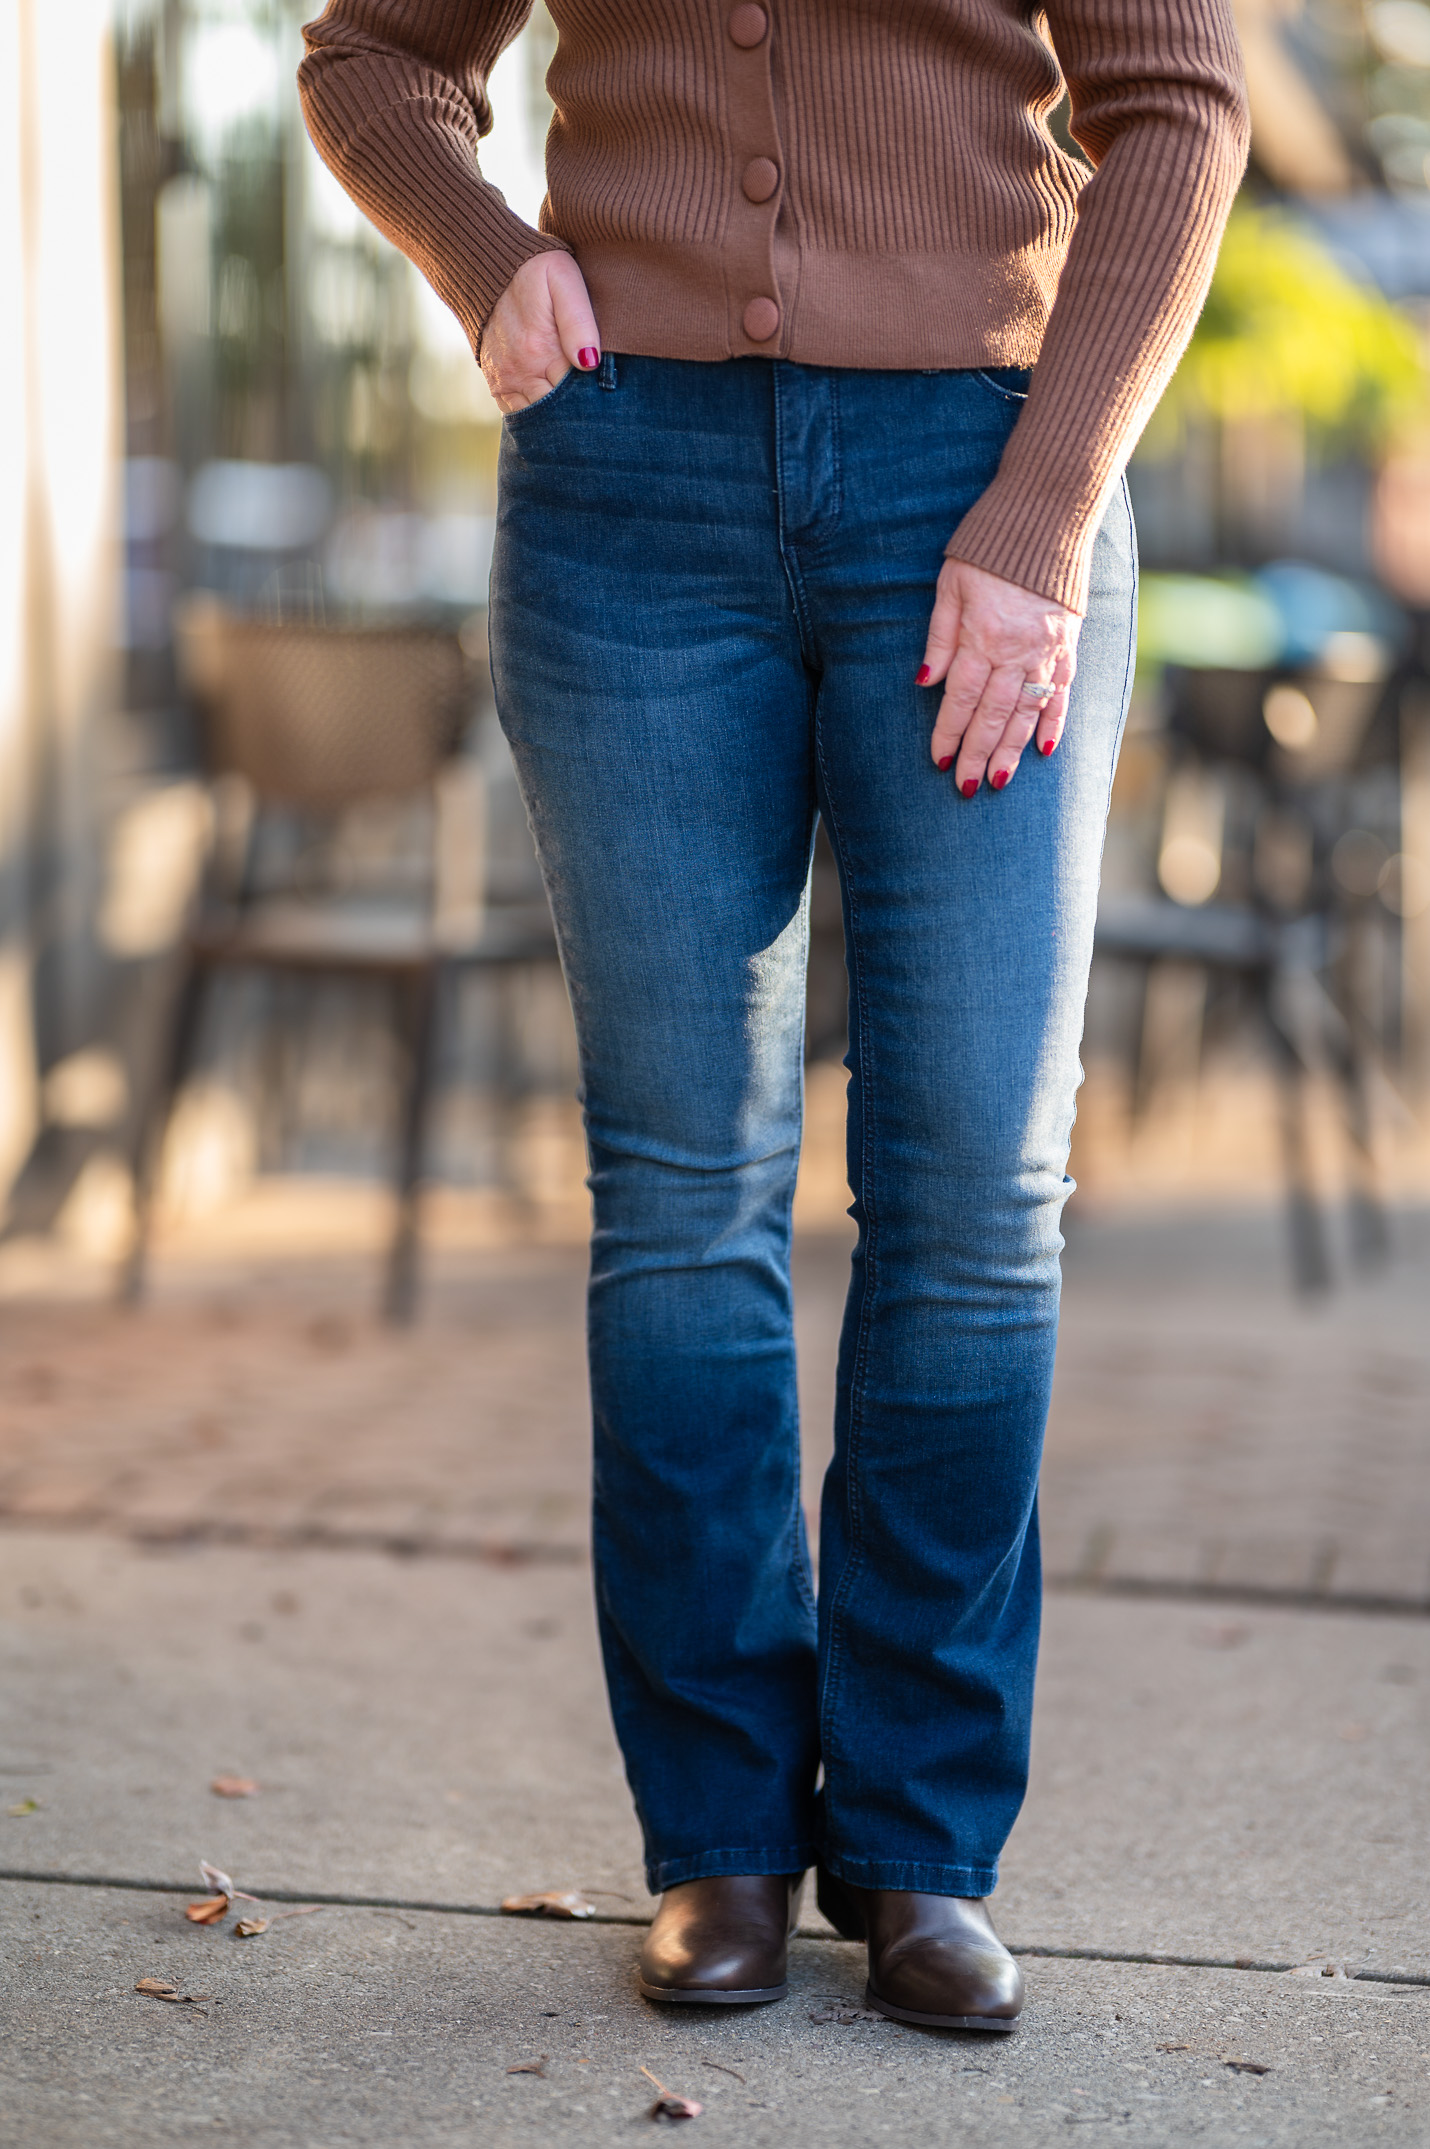 Simply Vera Vera Want boot-cut jeans